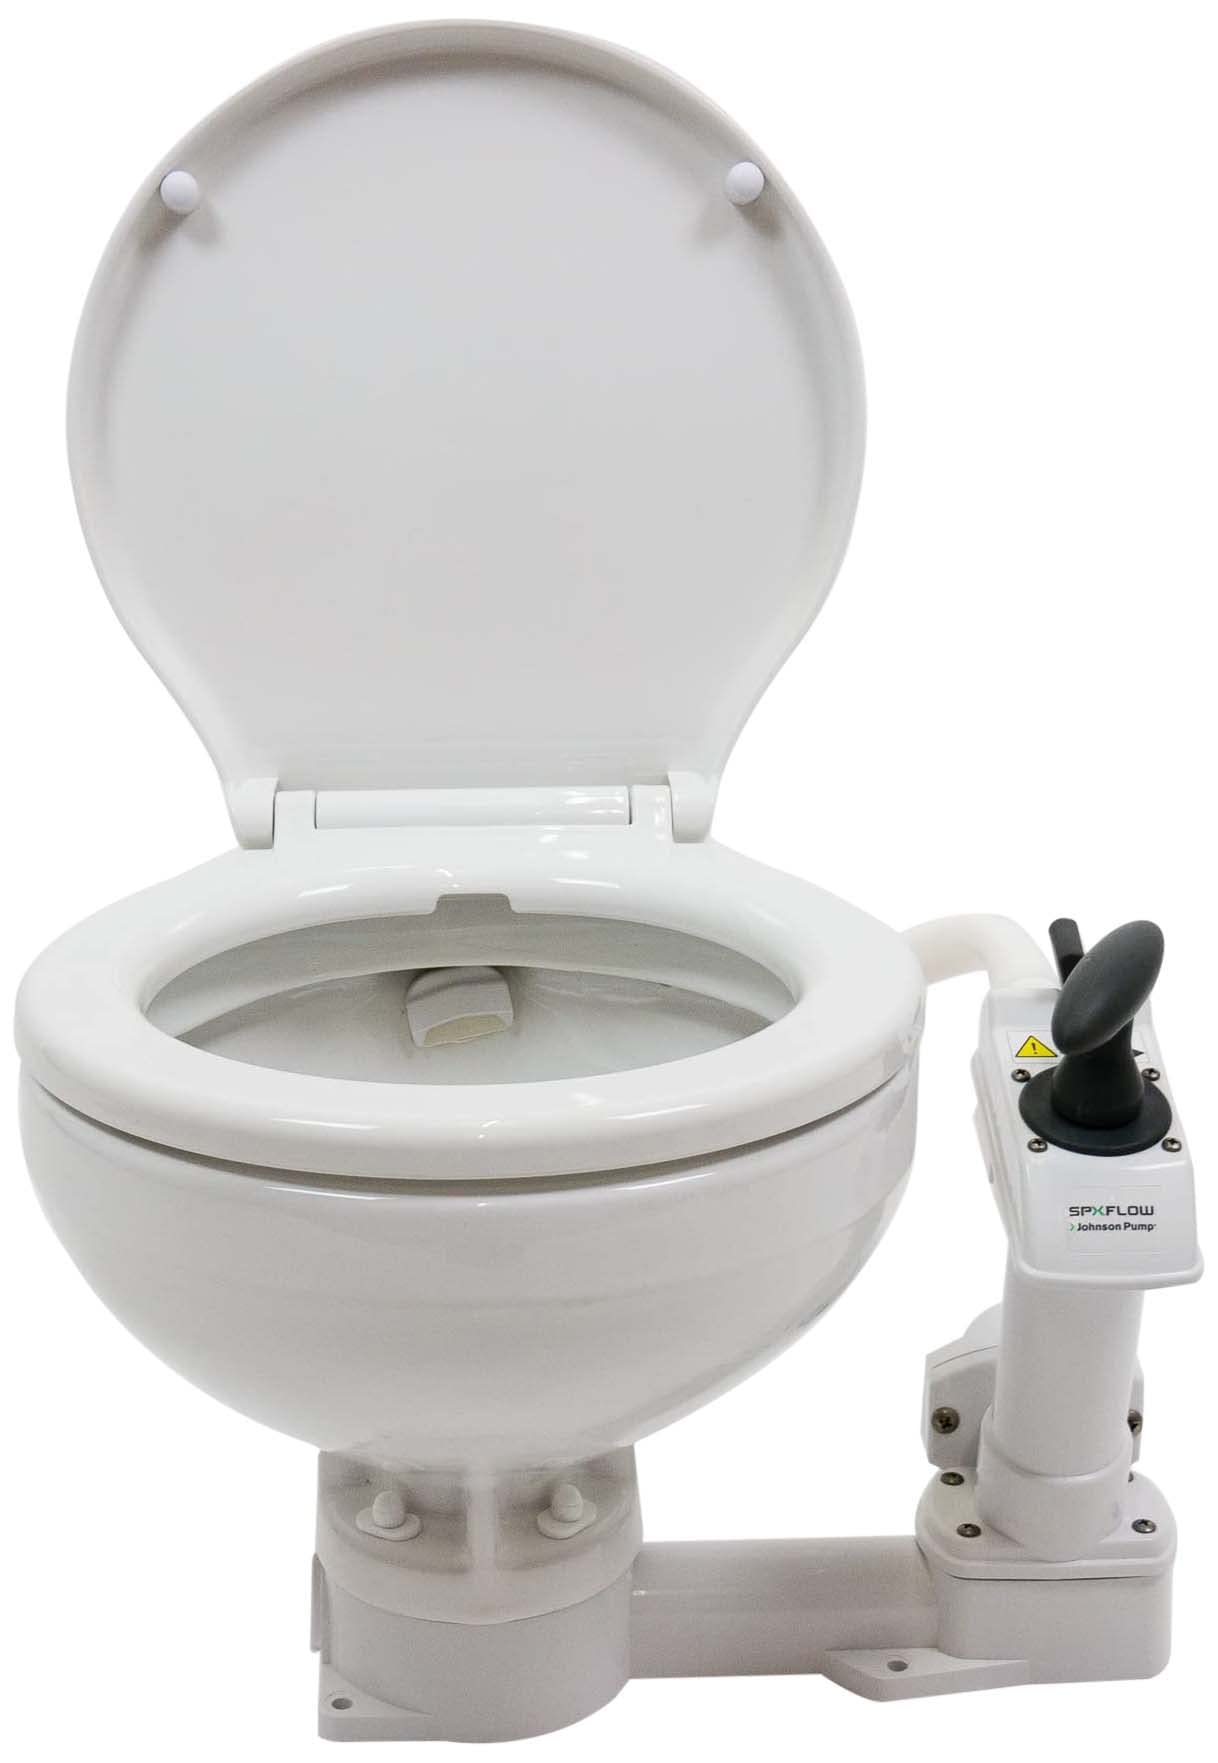 D&W The Motion Corporation DuW Toilette mit Keramikbecken mit Handpumpe 80-47229-01 Compact von D&W The Motion Corporation